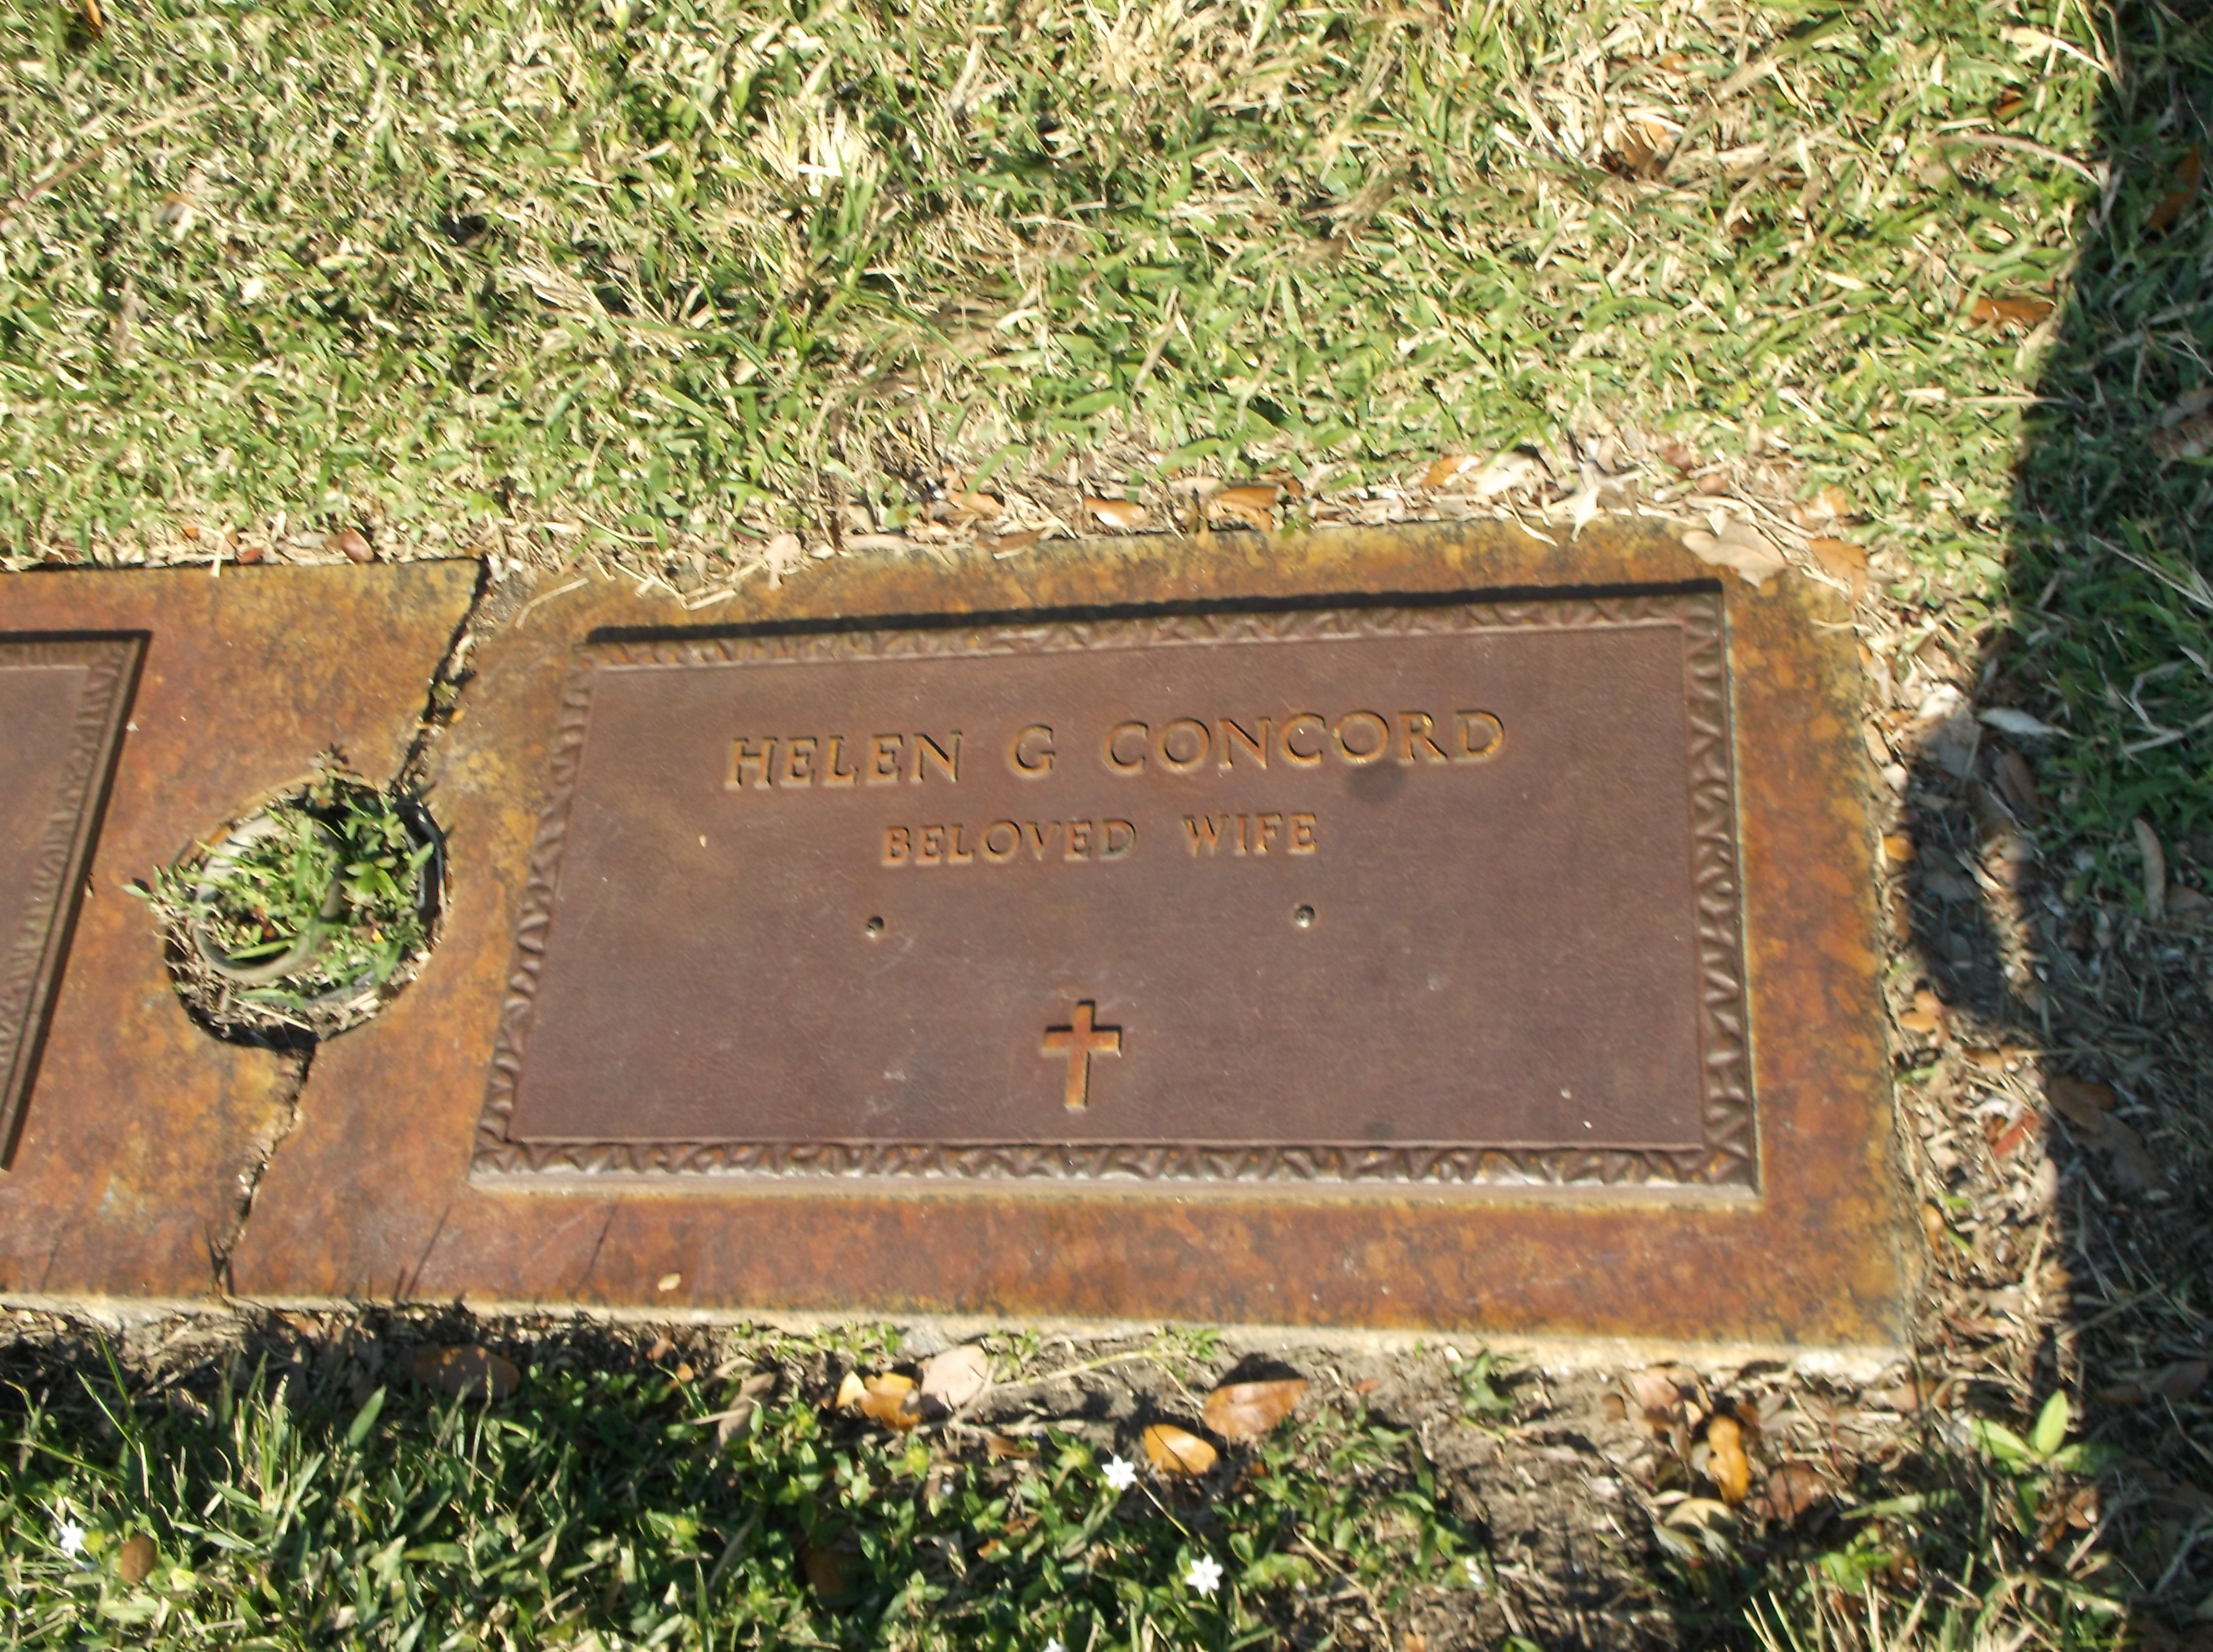 Helen G Concord